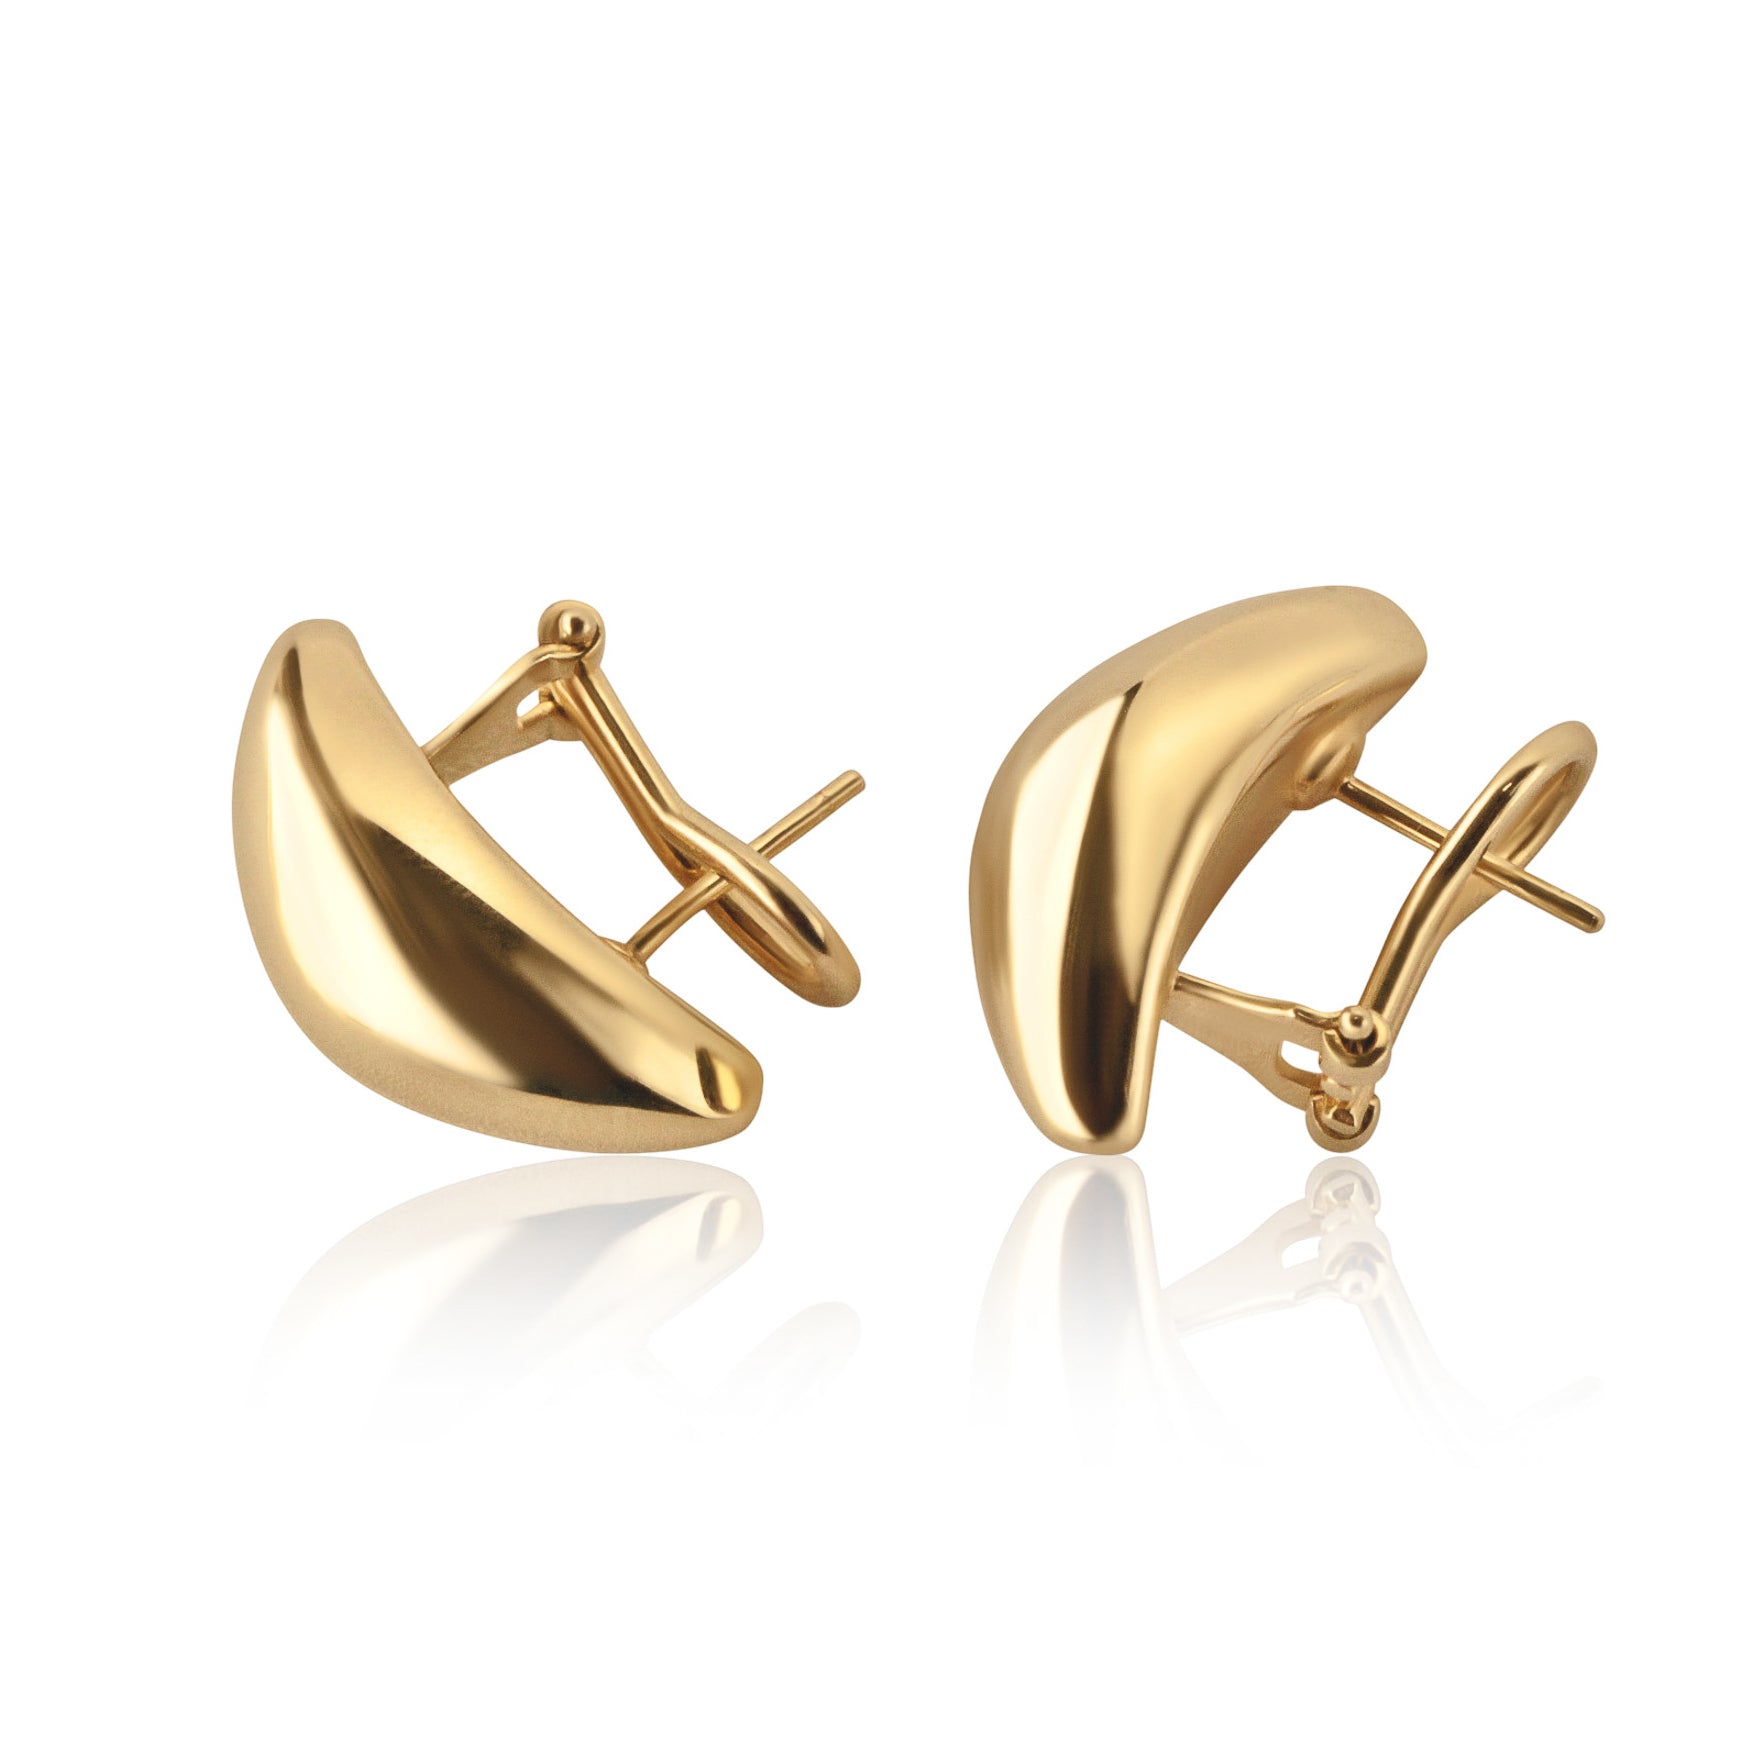 18k gold earrings made in Italy